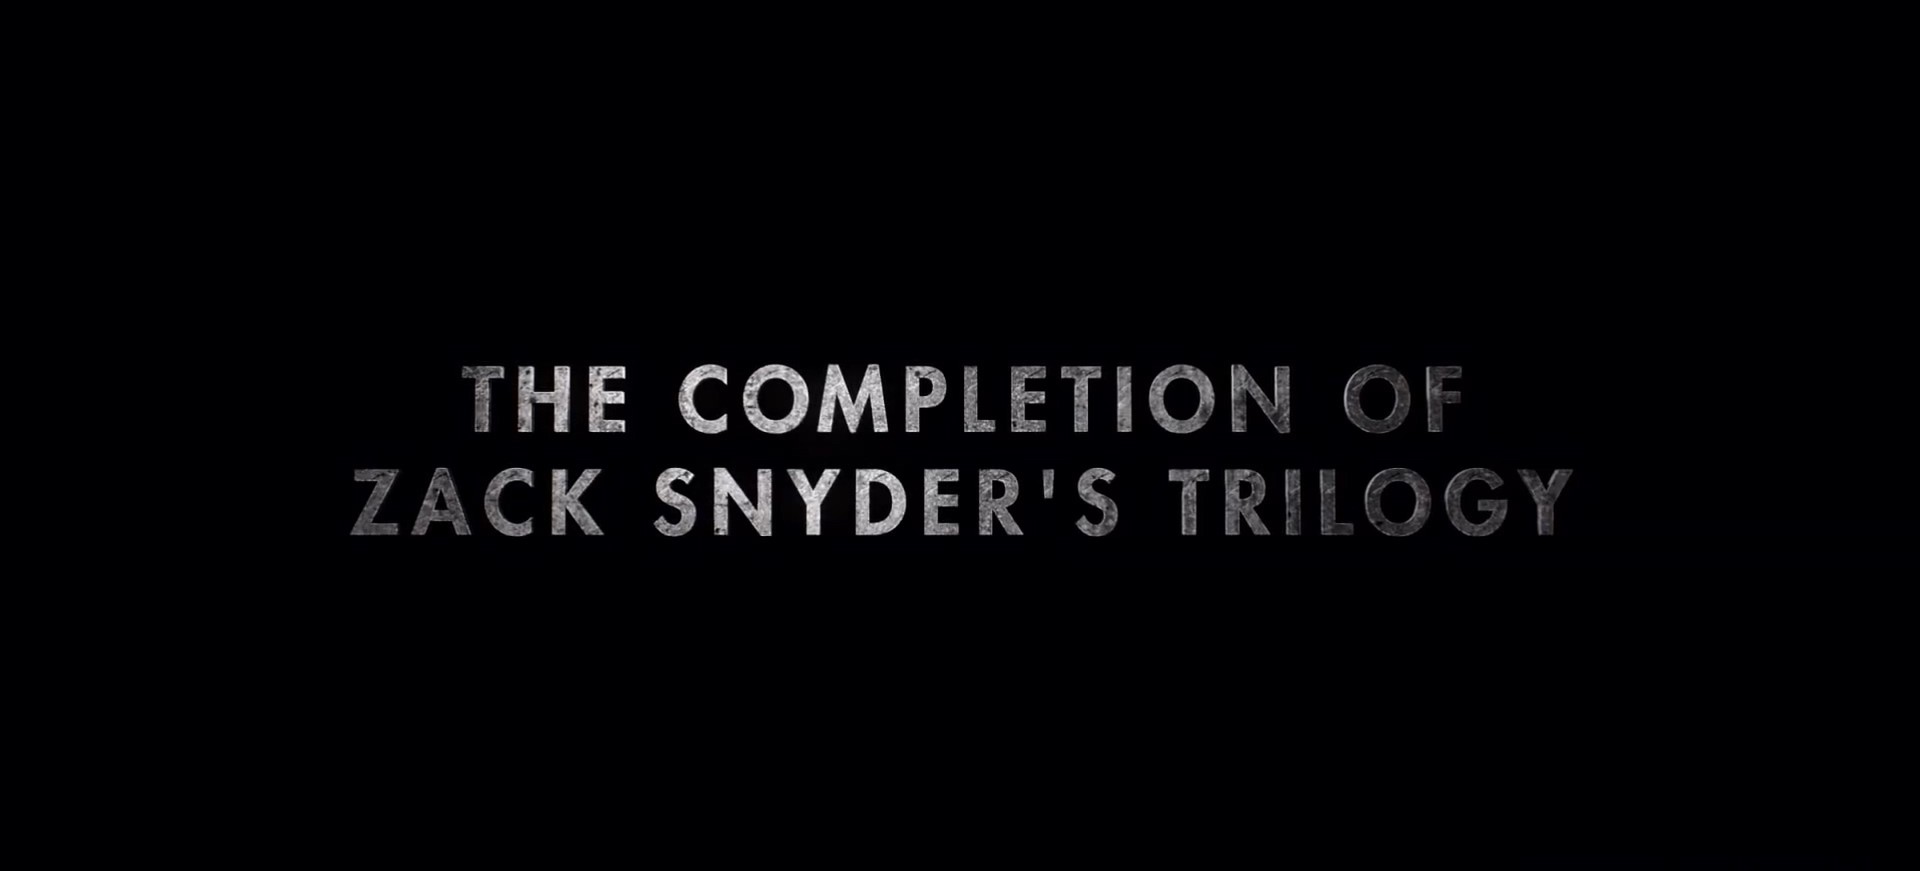 Zack Snyder’s Justice League - Trilogy.jpg